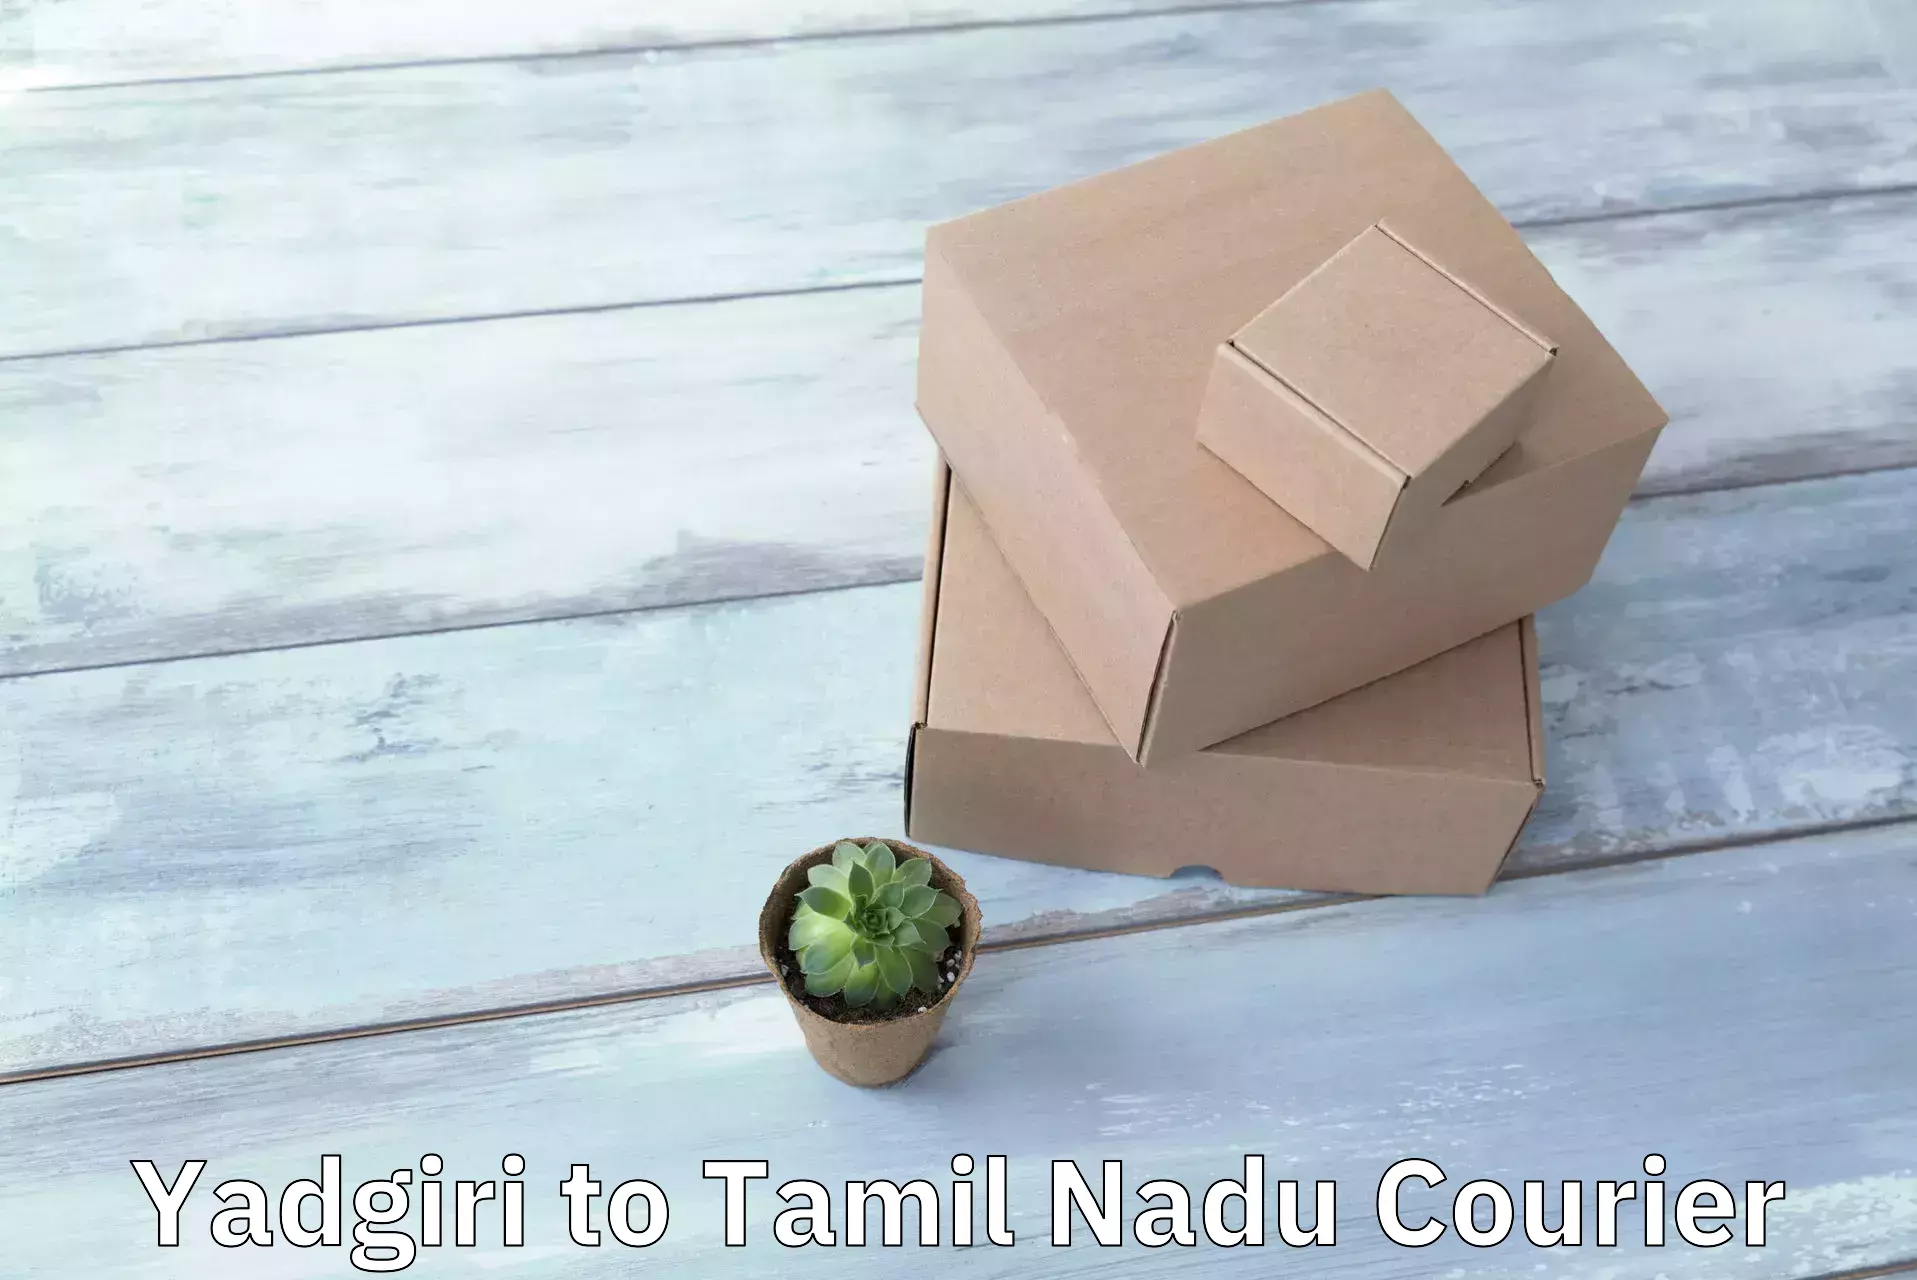 Flexible delivery scheduling Yadgiri to Tindivanam